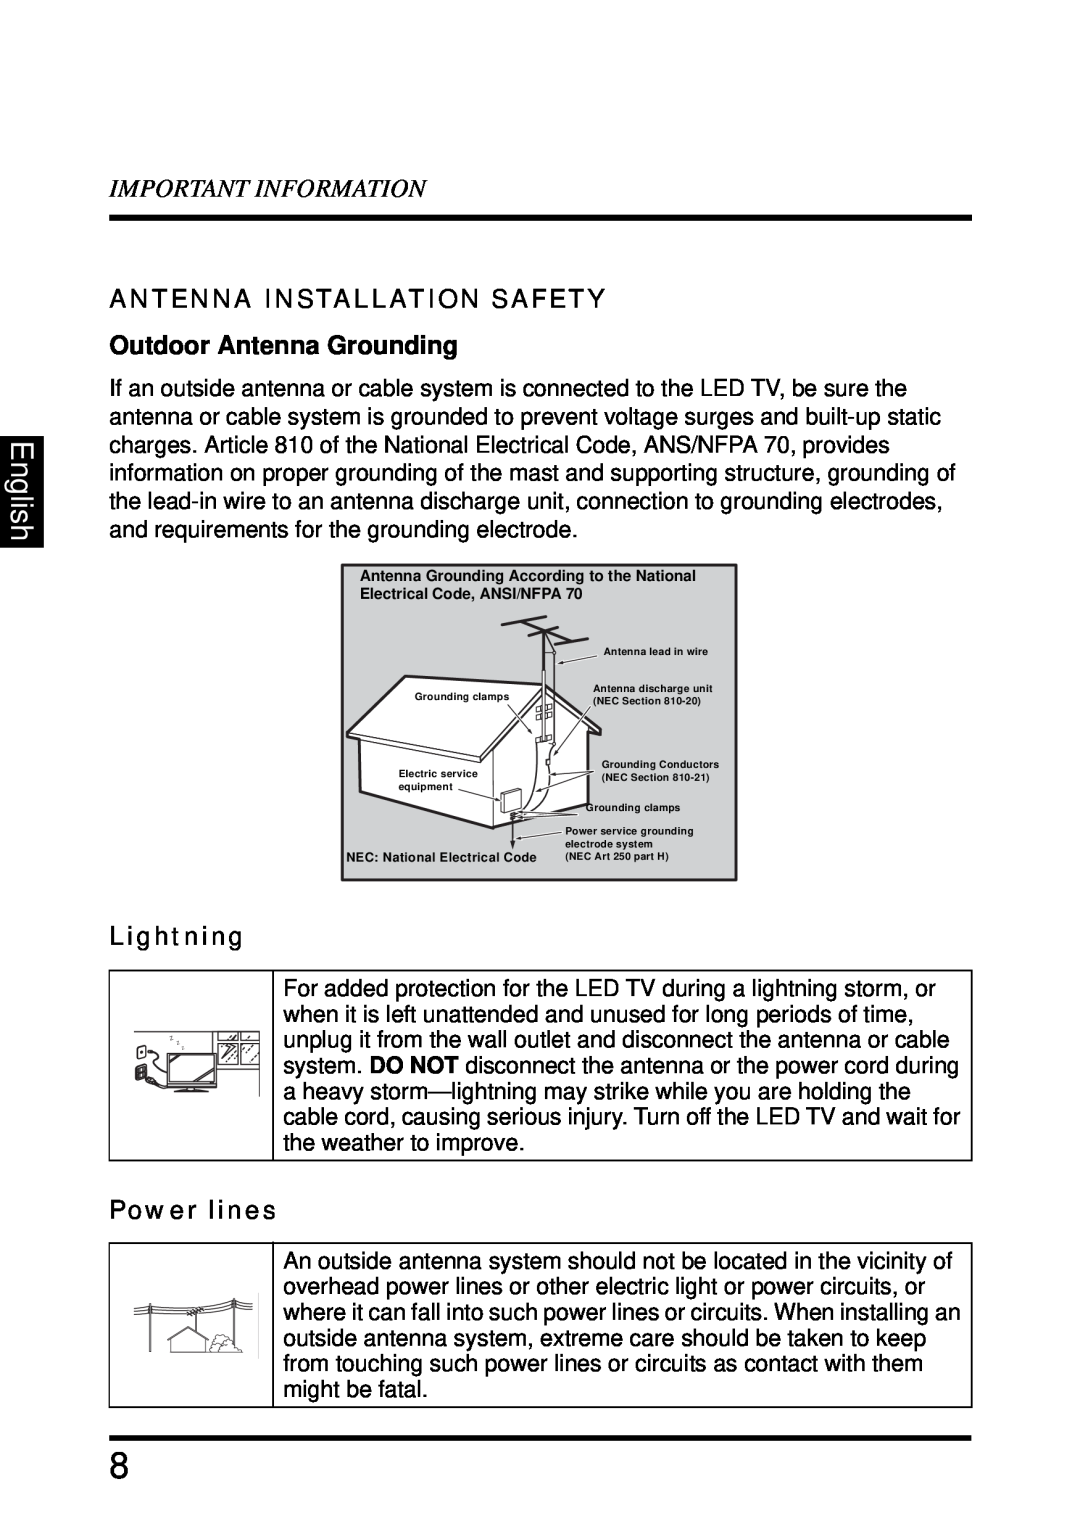 Westinghouse LD-4680 English, Important Information, ANTENNA INSTALLATION SAFETY Outdoor Antenna Grounding, Lightning 